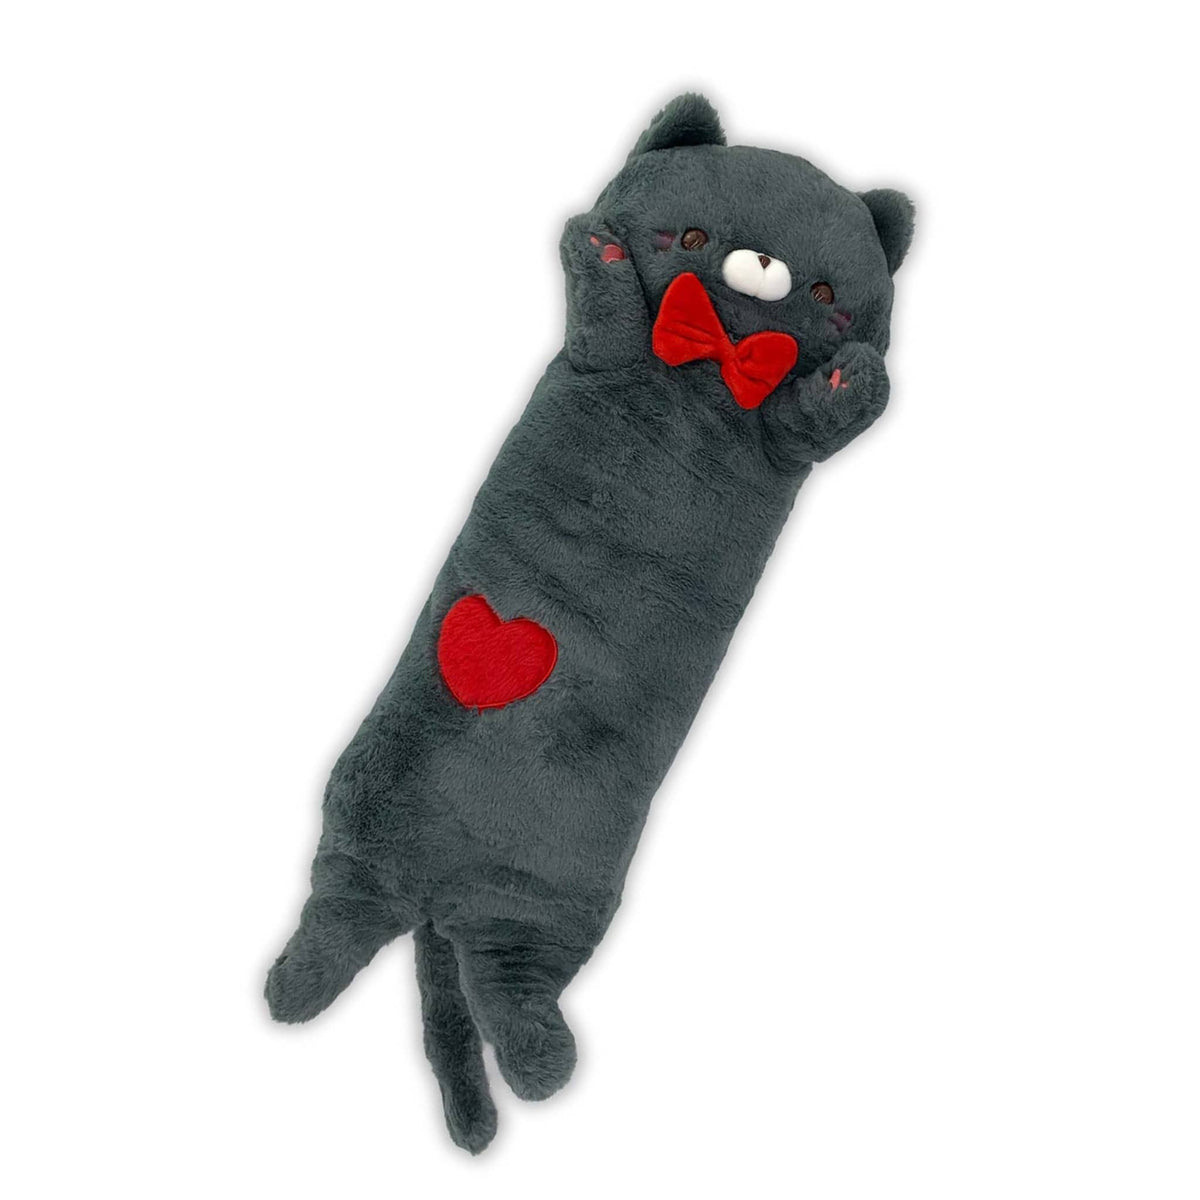 Nyanko Plushie - Hug Me! Edition - Licorice